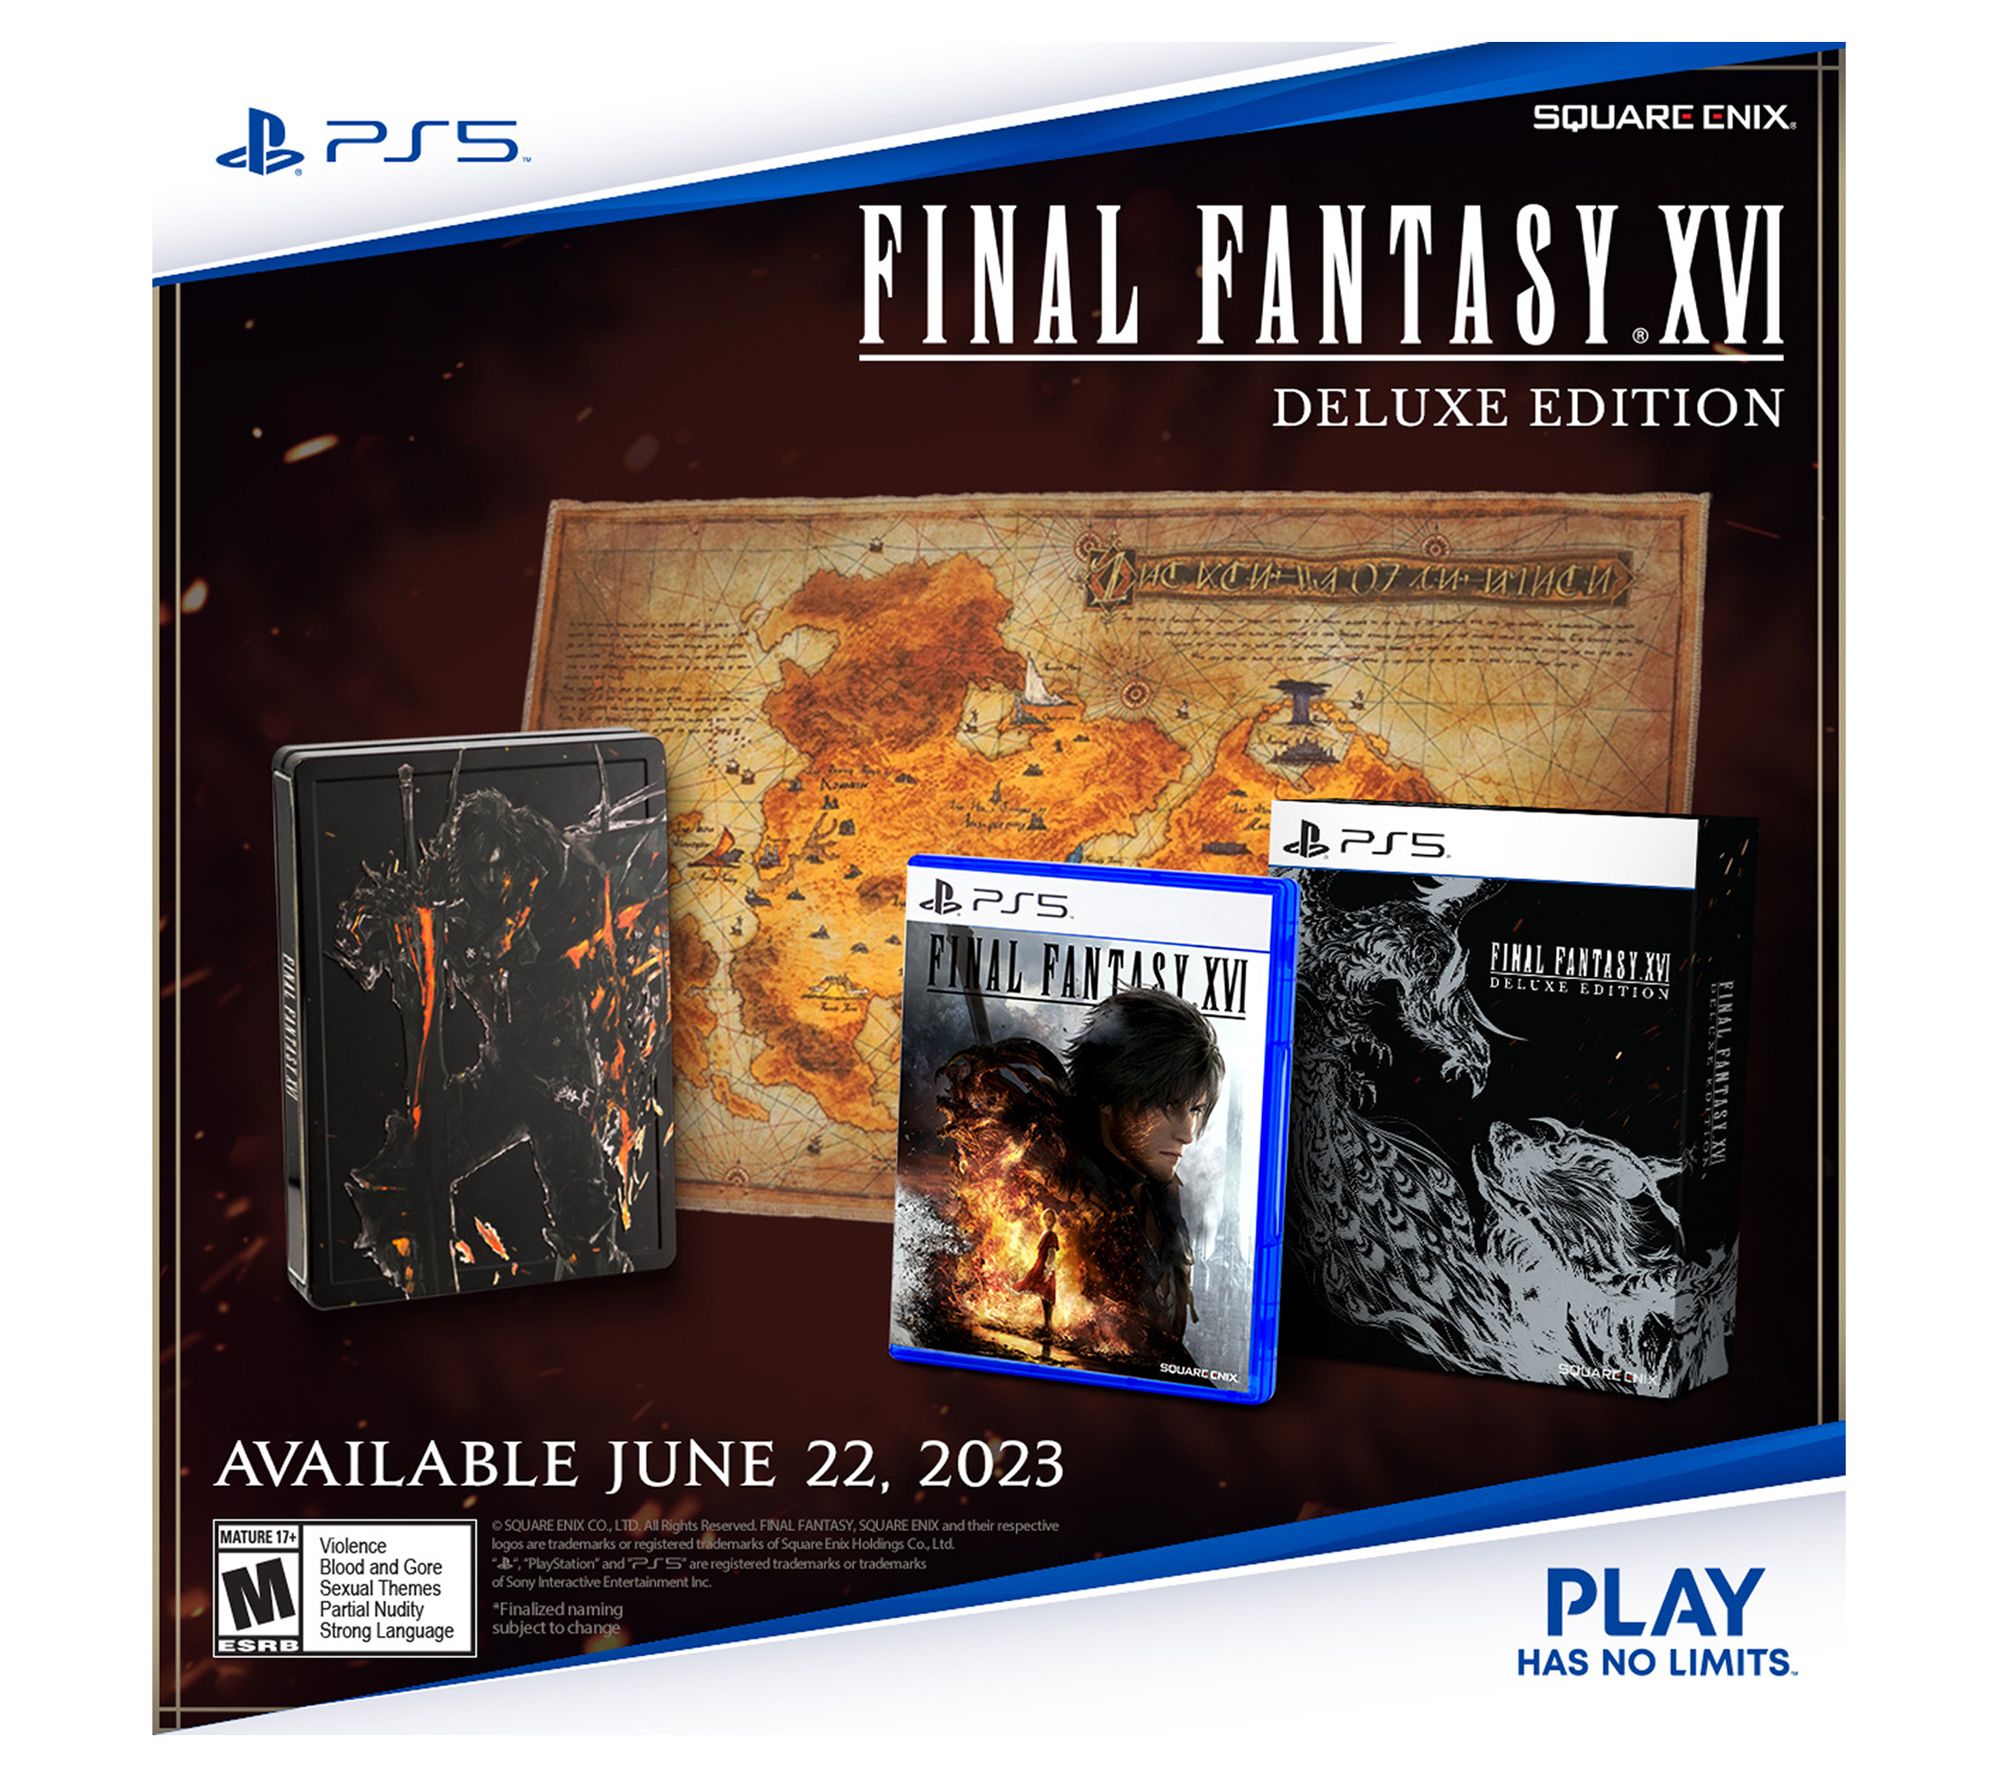 - Final PS5 XVI: Deluxe Fantasy Edition